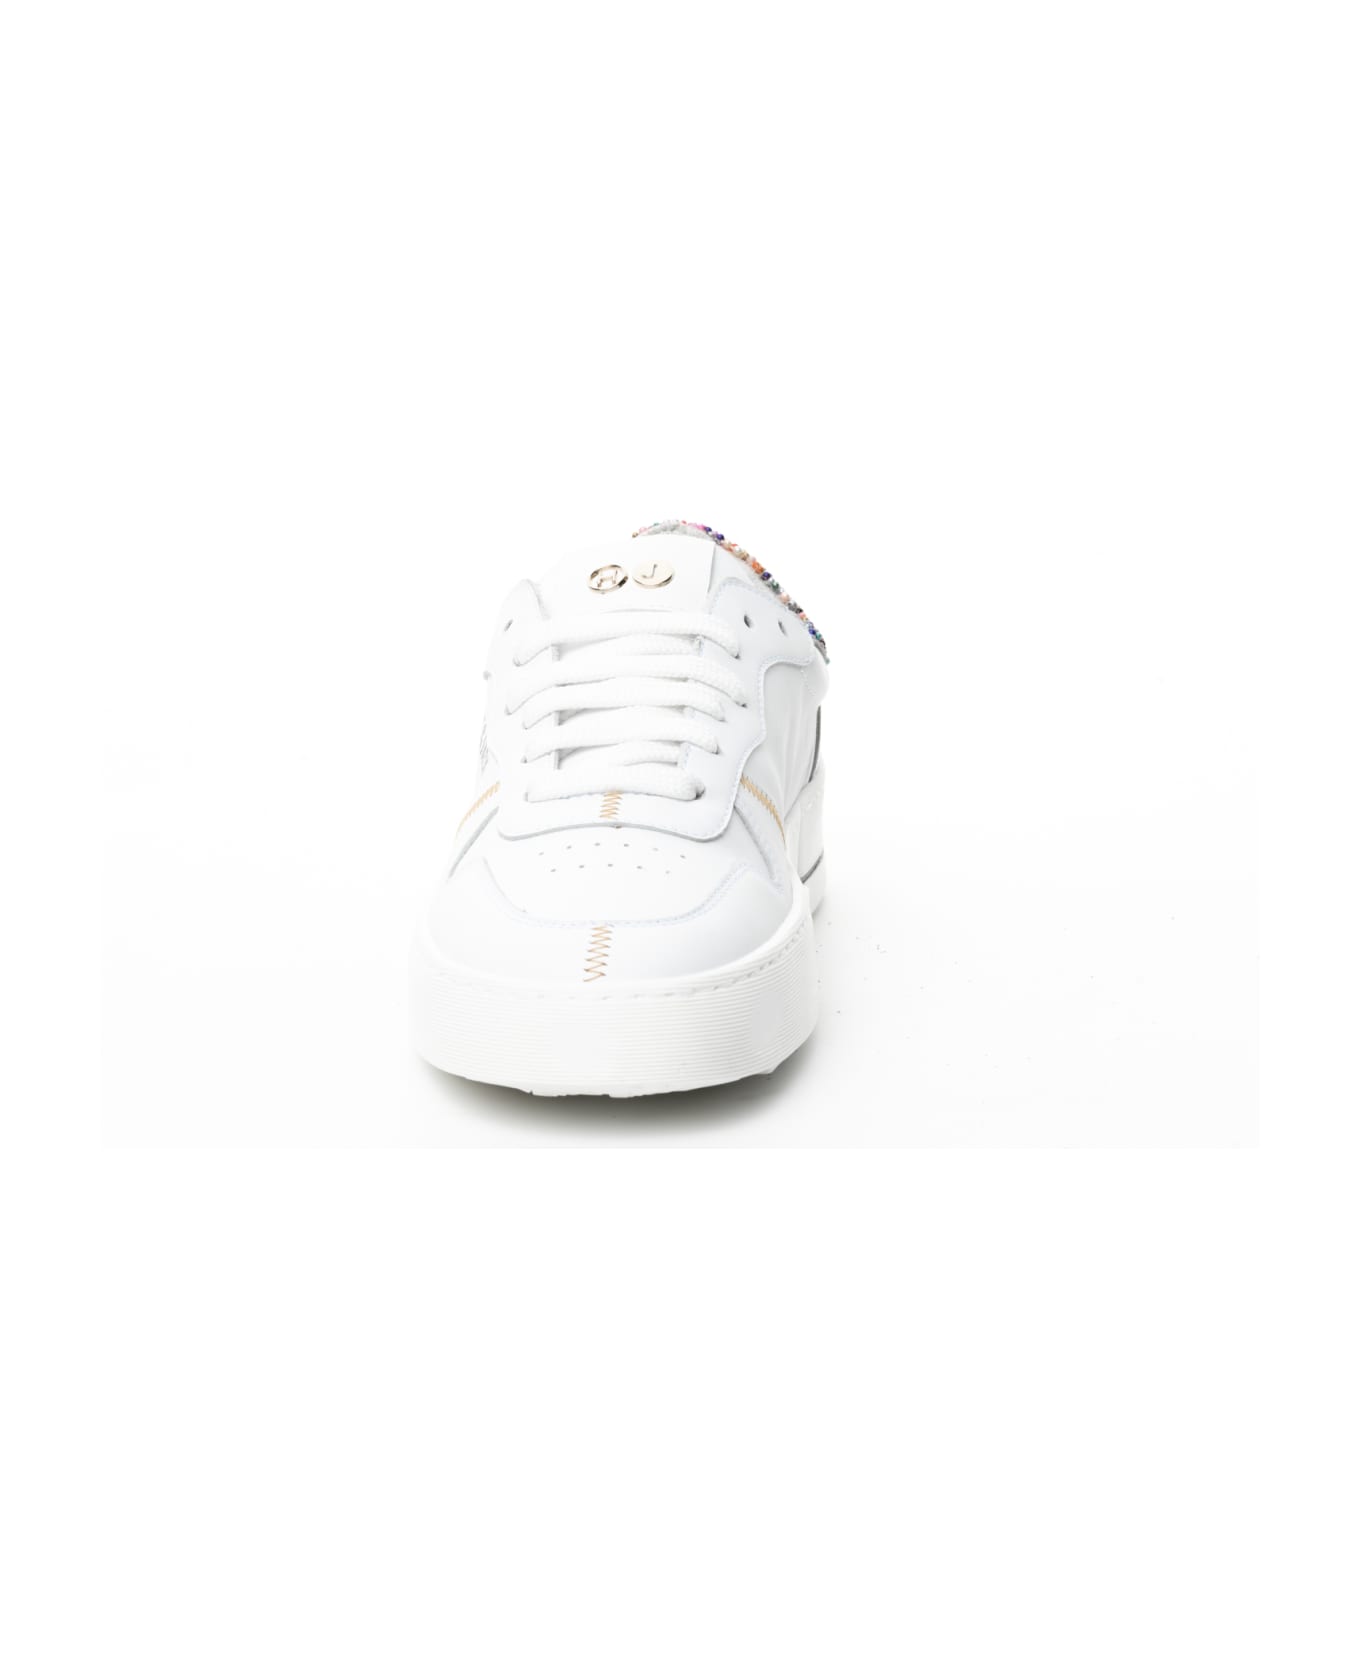 Hide&Jack Low Top Sneaker - Phantom Sky Bubble White - Bubble White